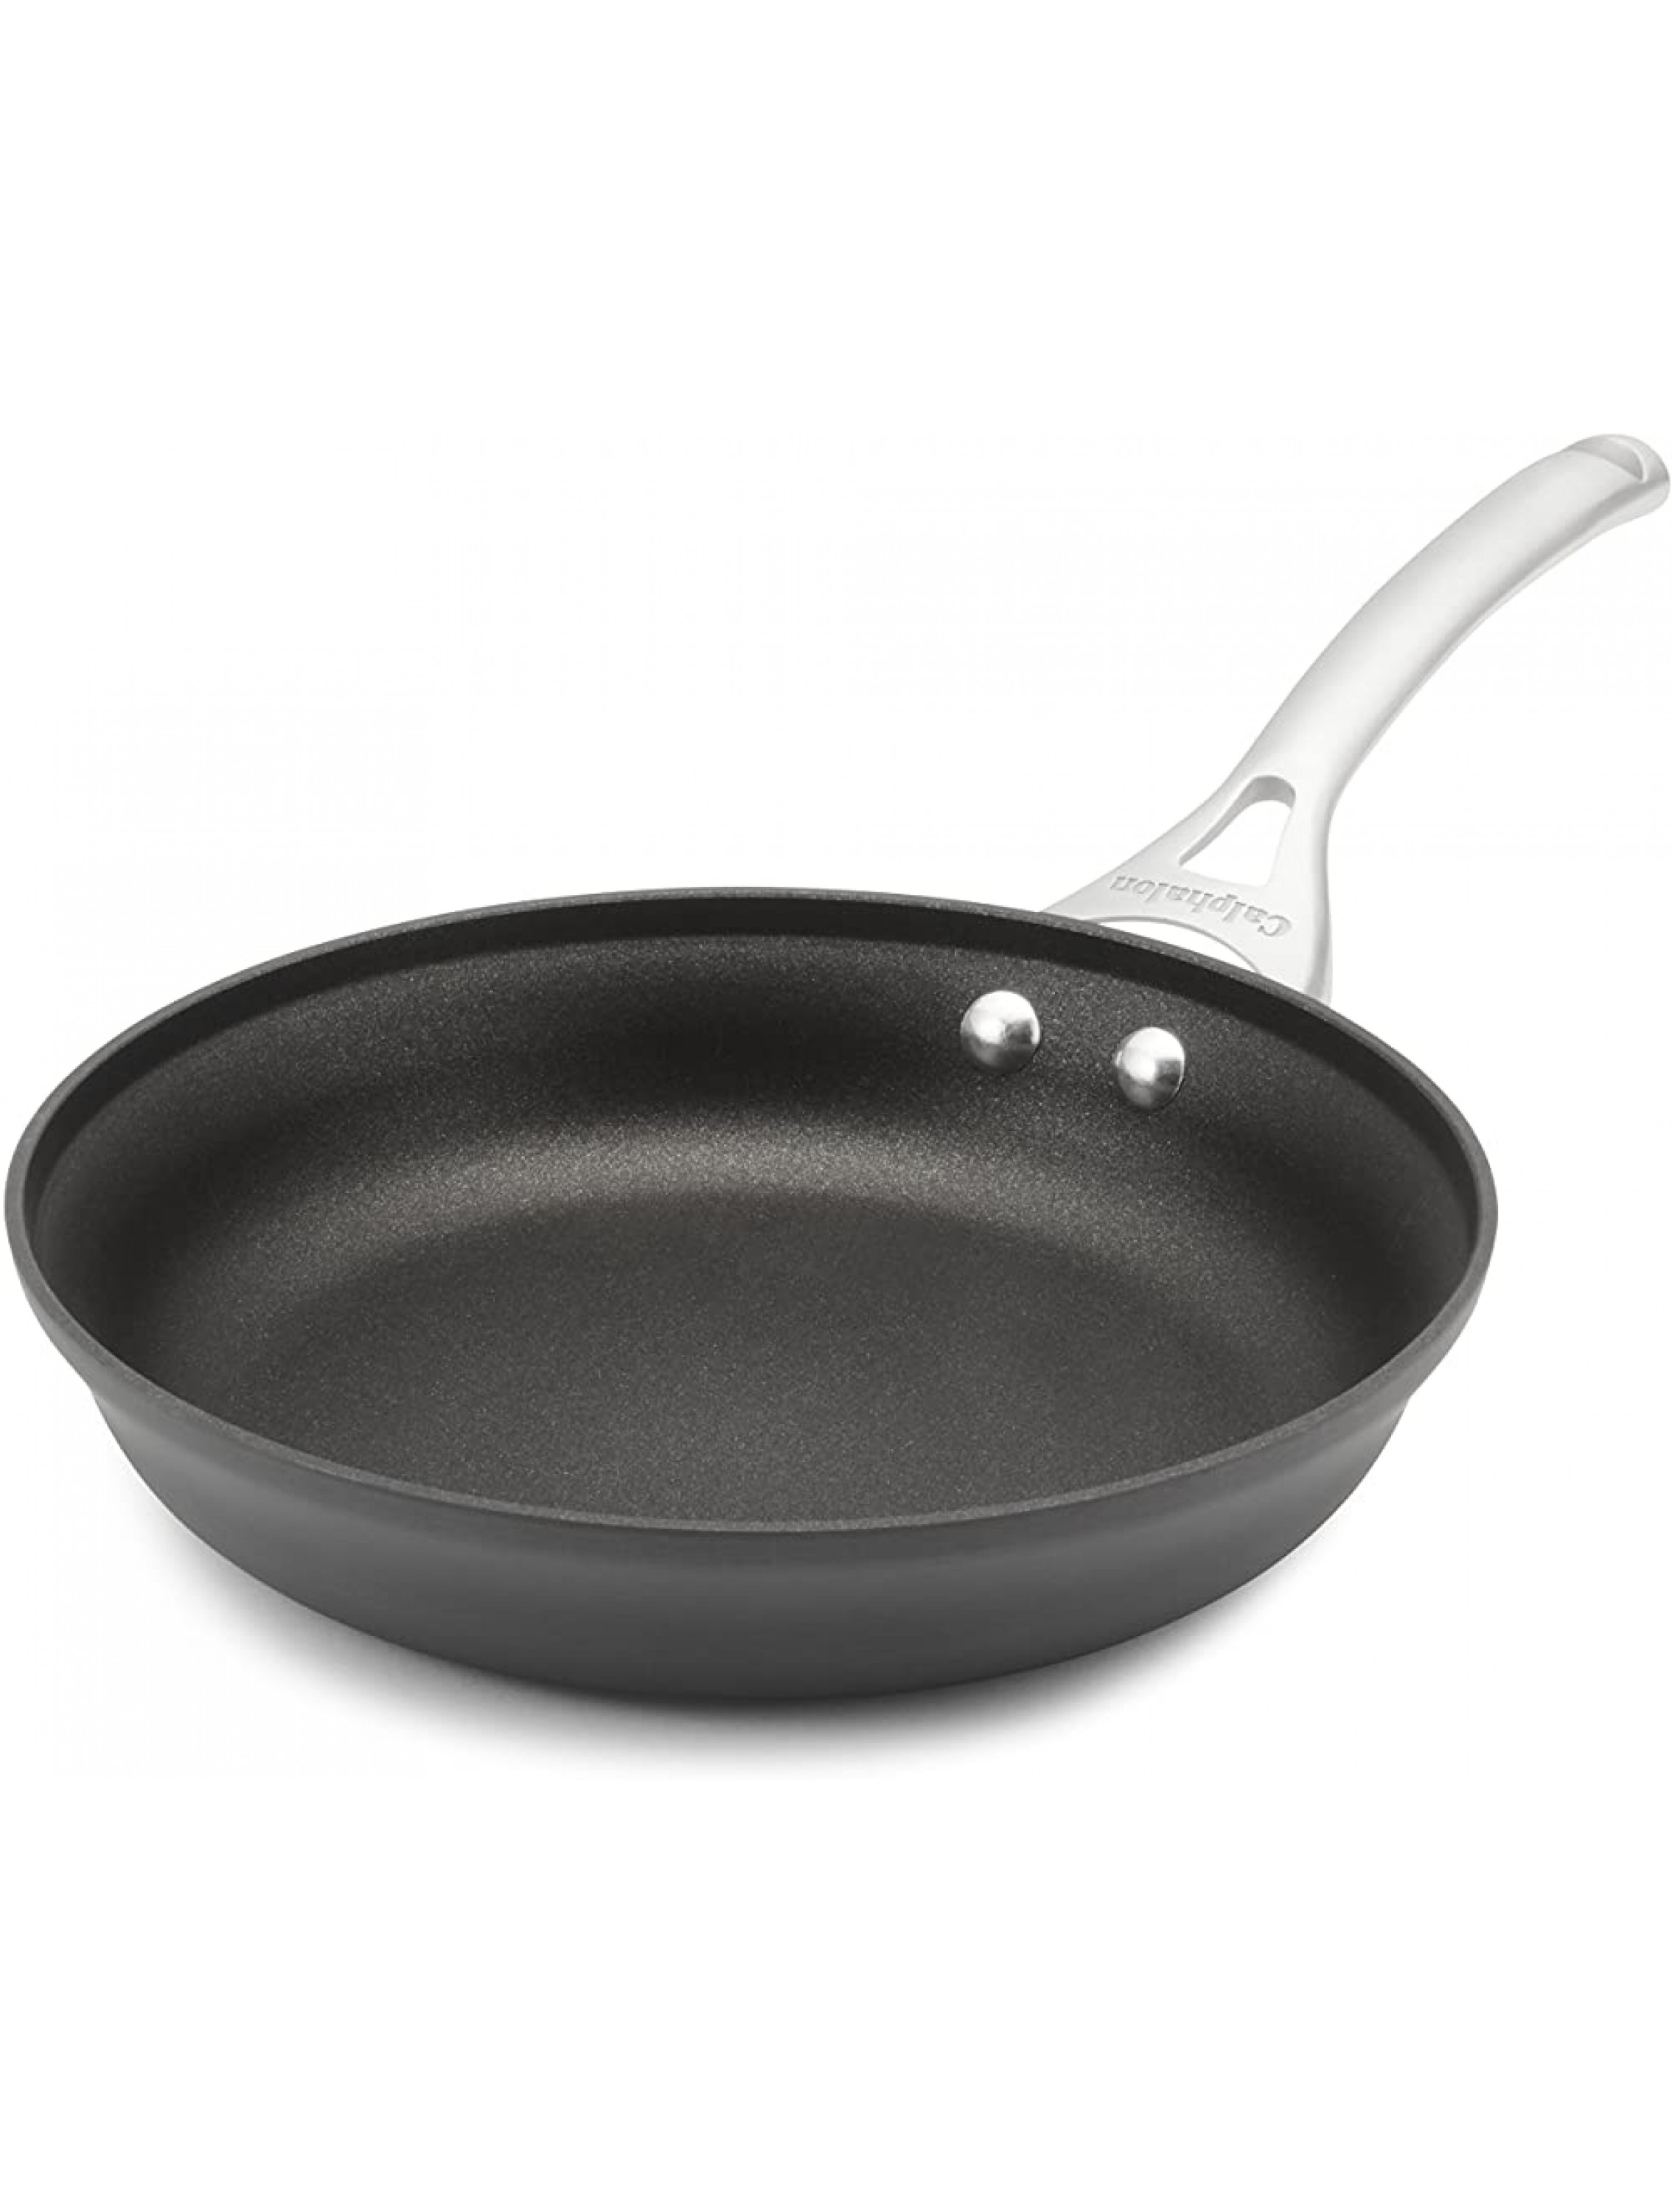 Calphalon Contemporary Hard-Anodized Aluminum Nonstick Cookware Omelette Fry Pan 10-inch Black - B5QI8B4H2